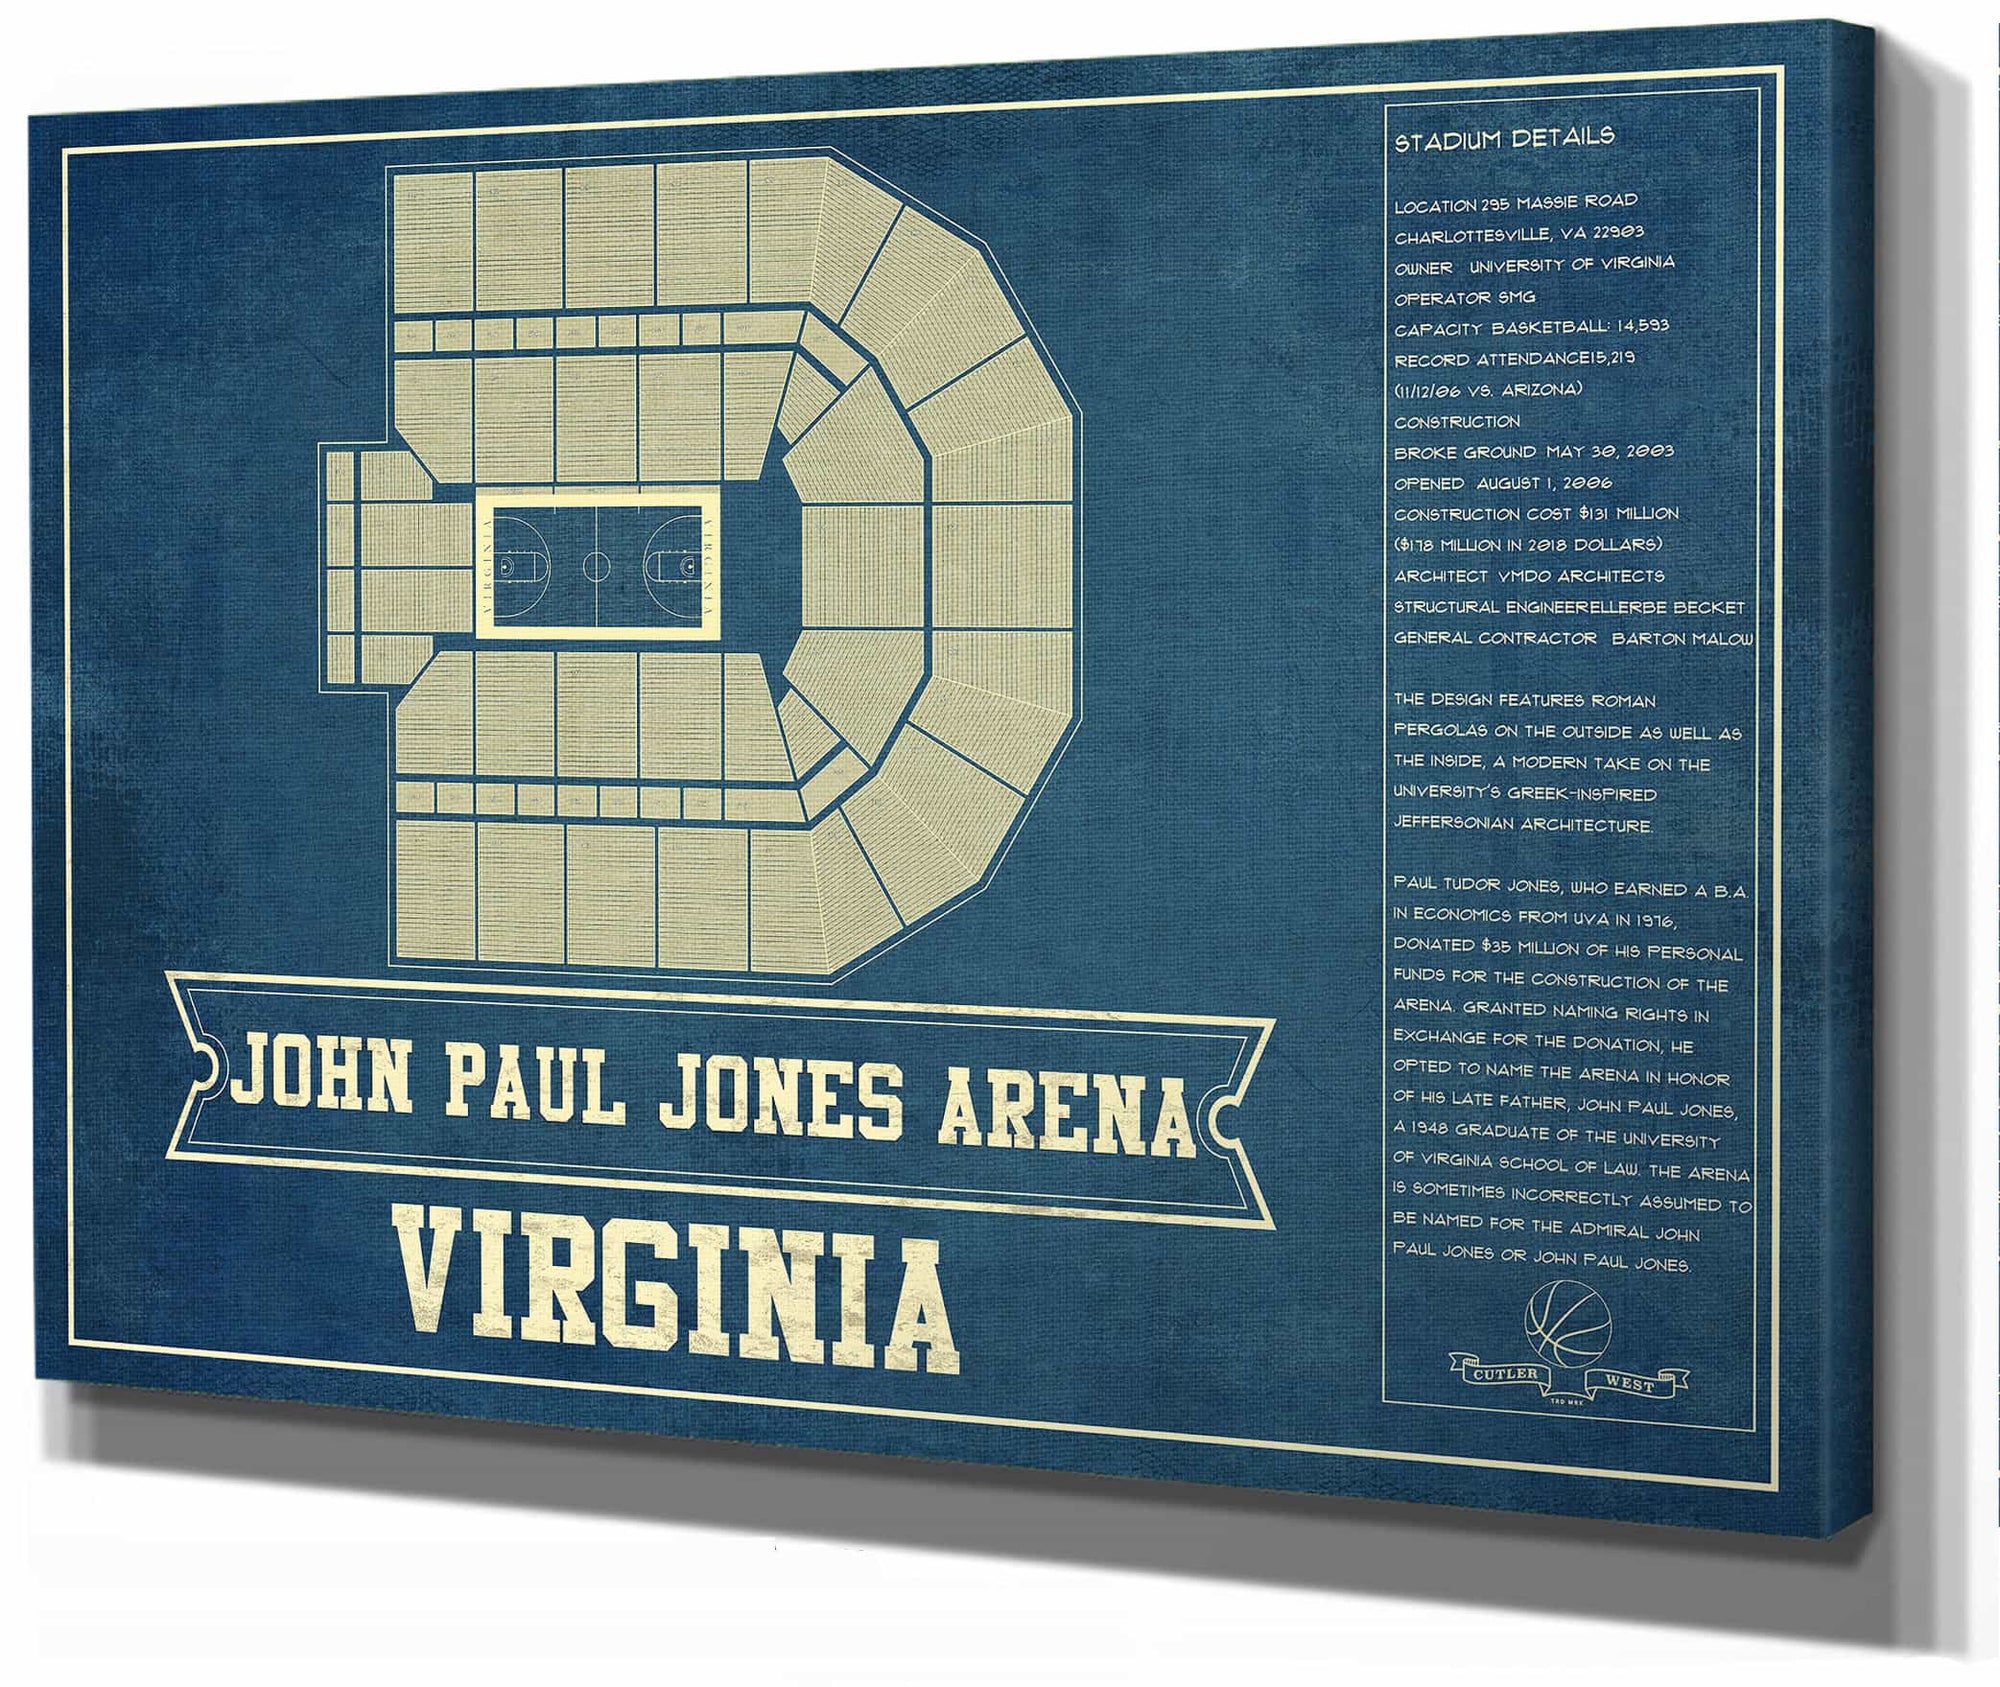 Virginia Cavaliers - John Paul Jones Arena Seating Chart - College Basketball Blueprint Art